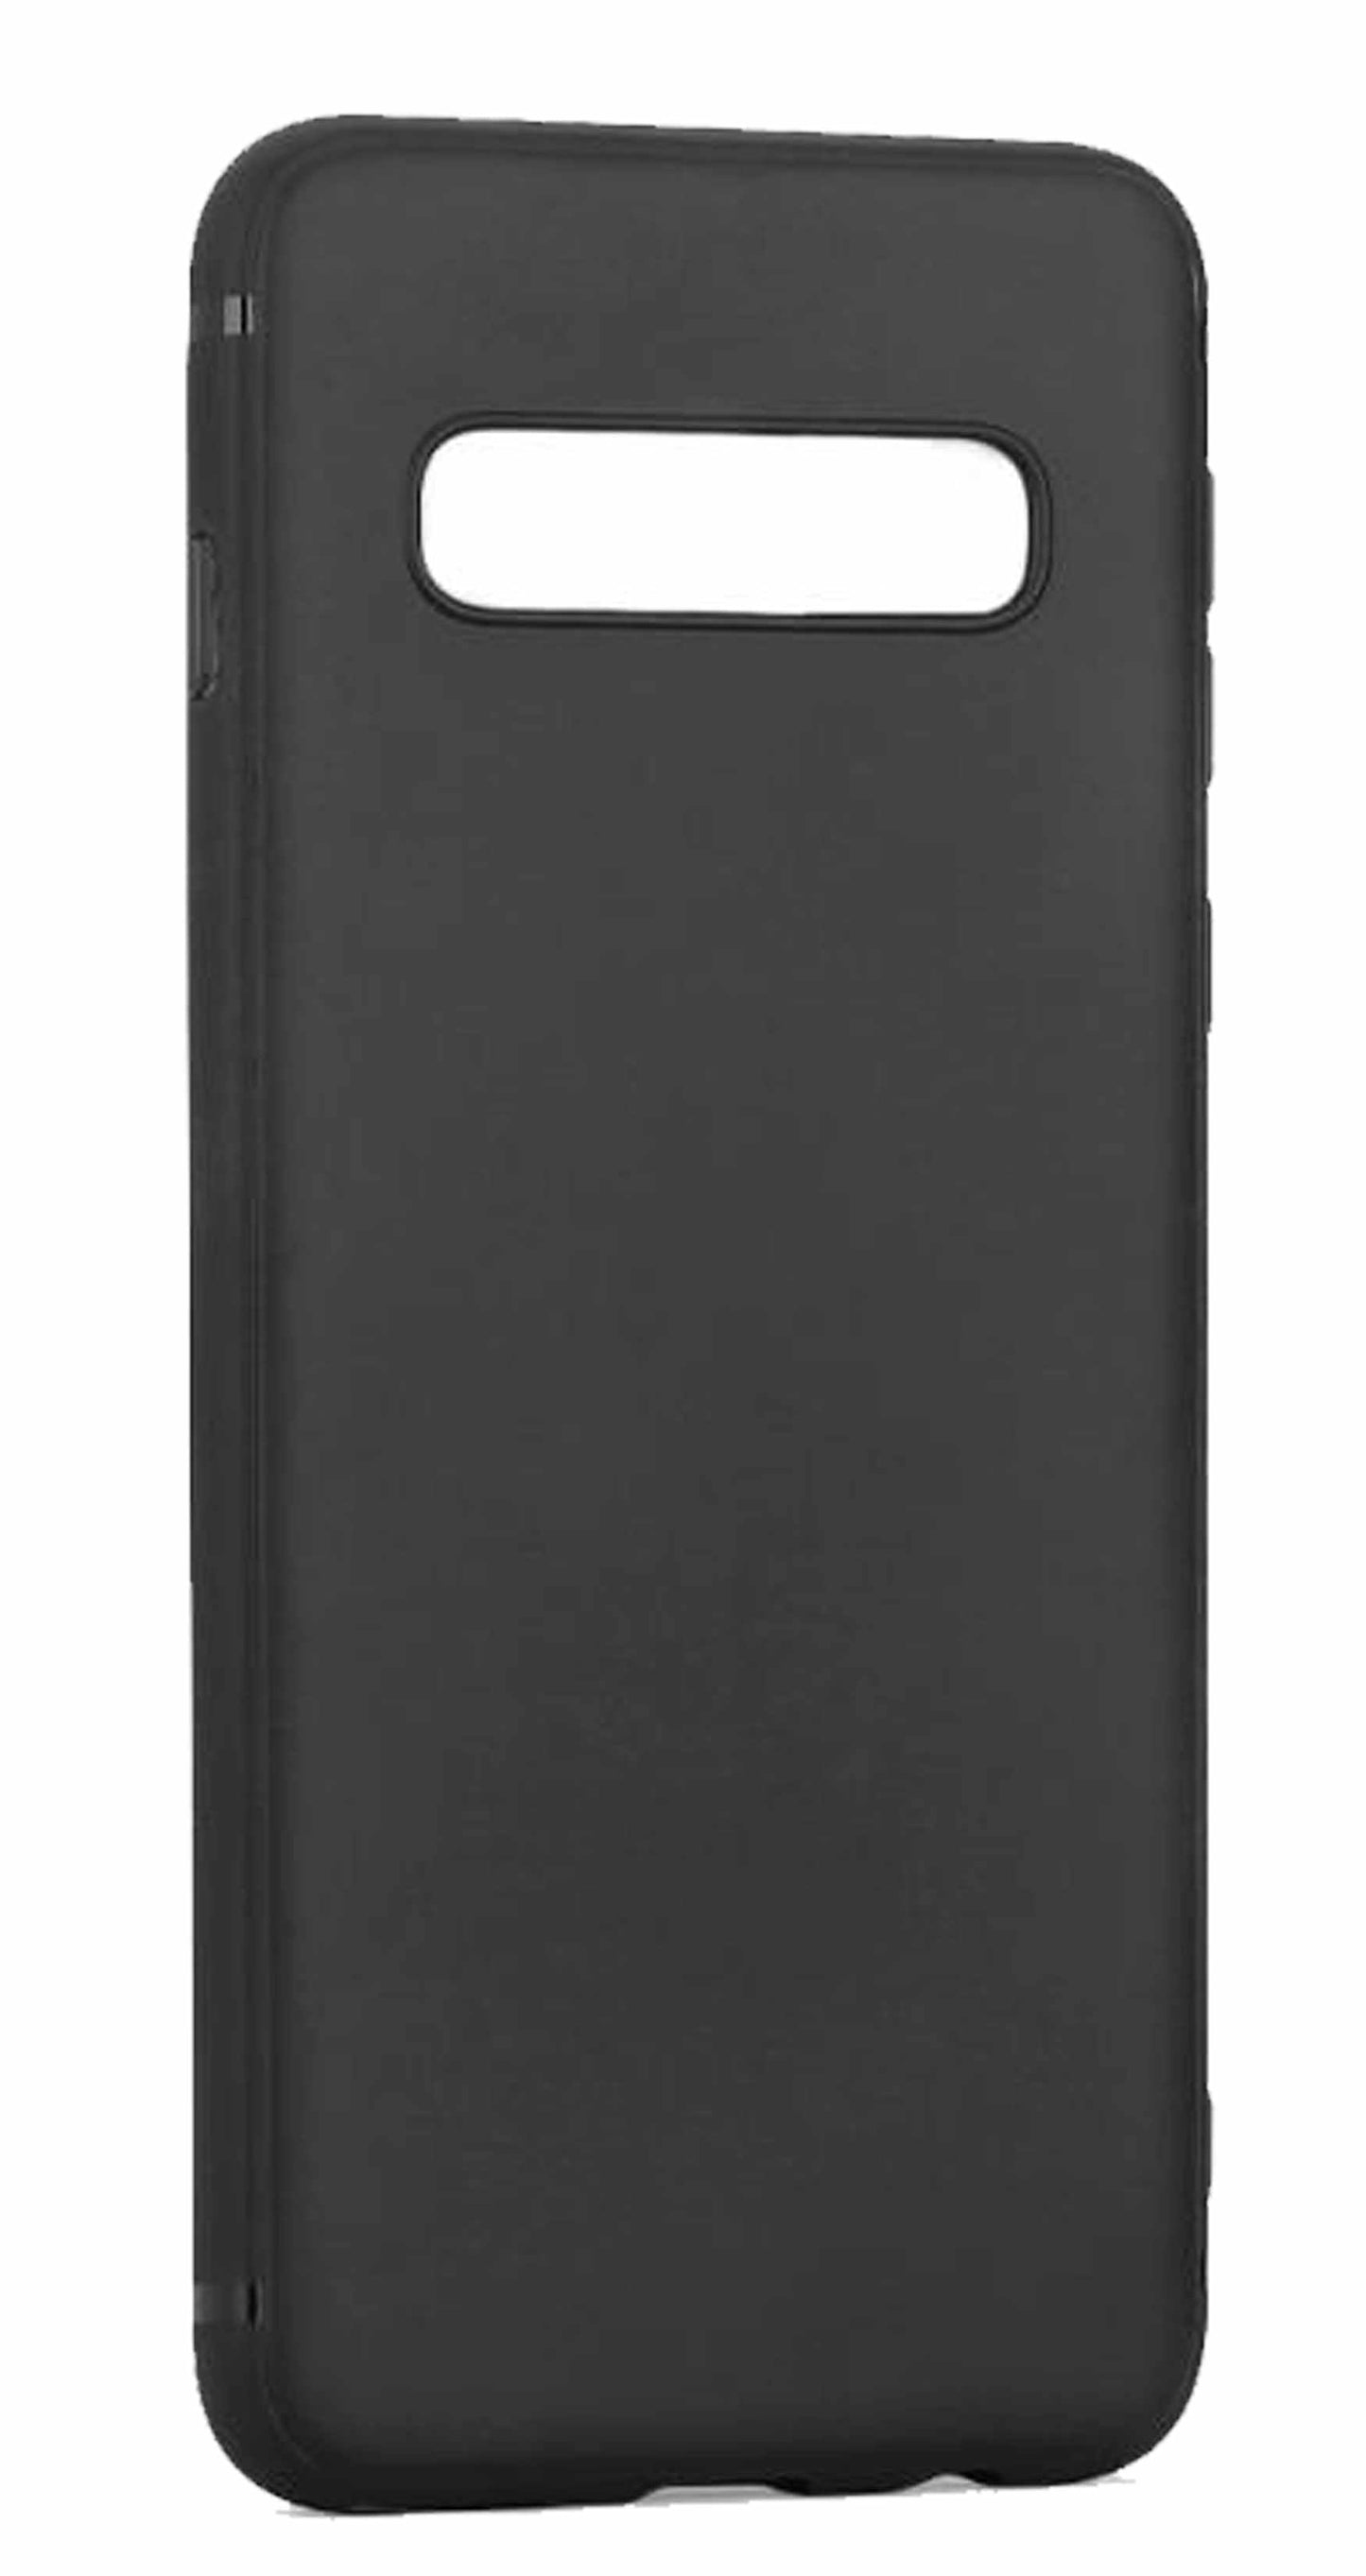 Gel Skin Case Black for Samsung Galaxy S10+